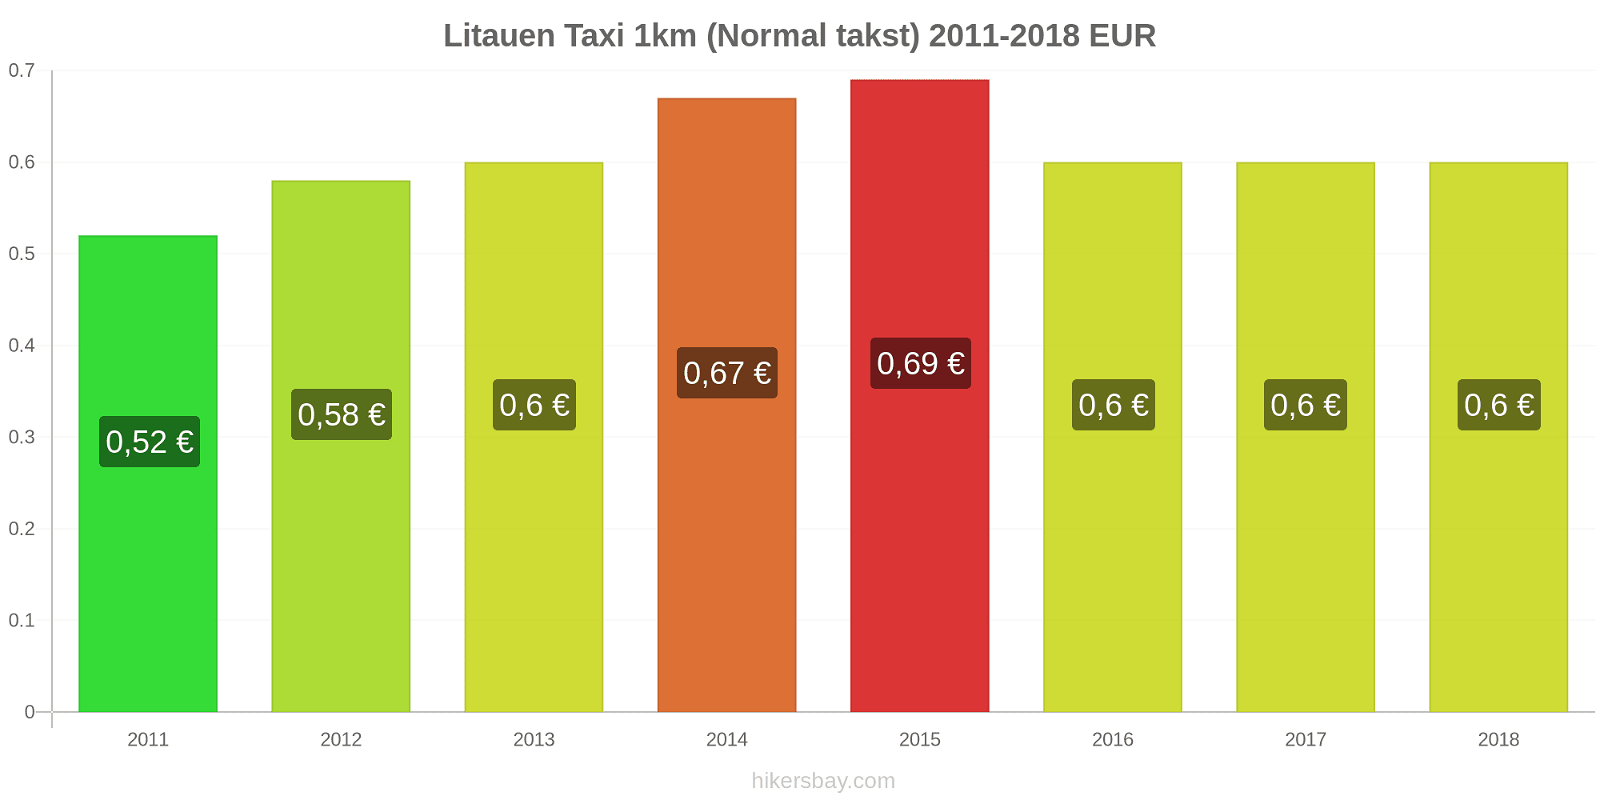 Litauen prisændringer Taxi 1km (normal takst) hikersbay.com